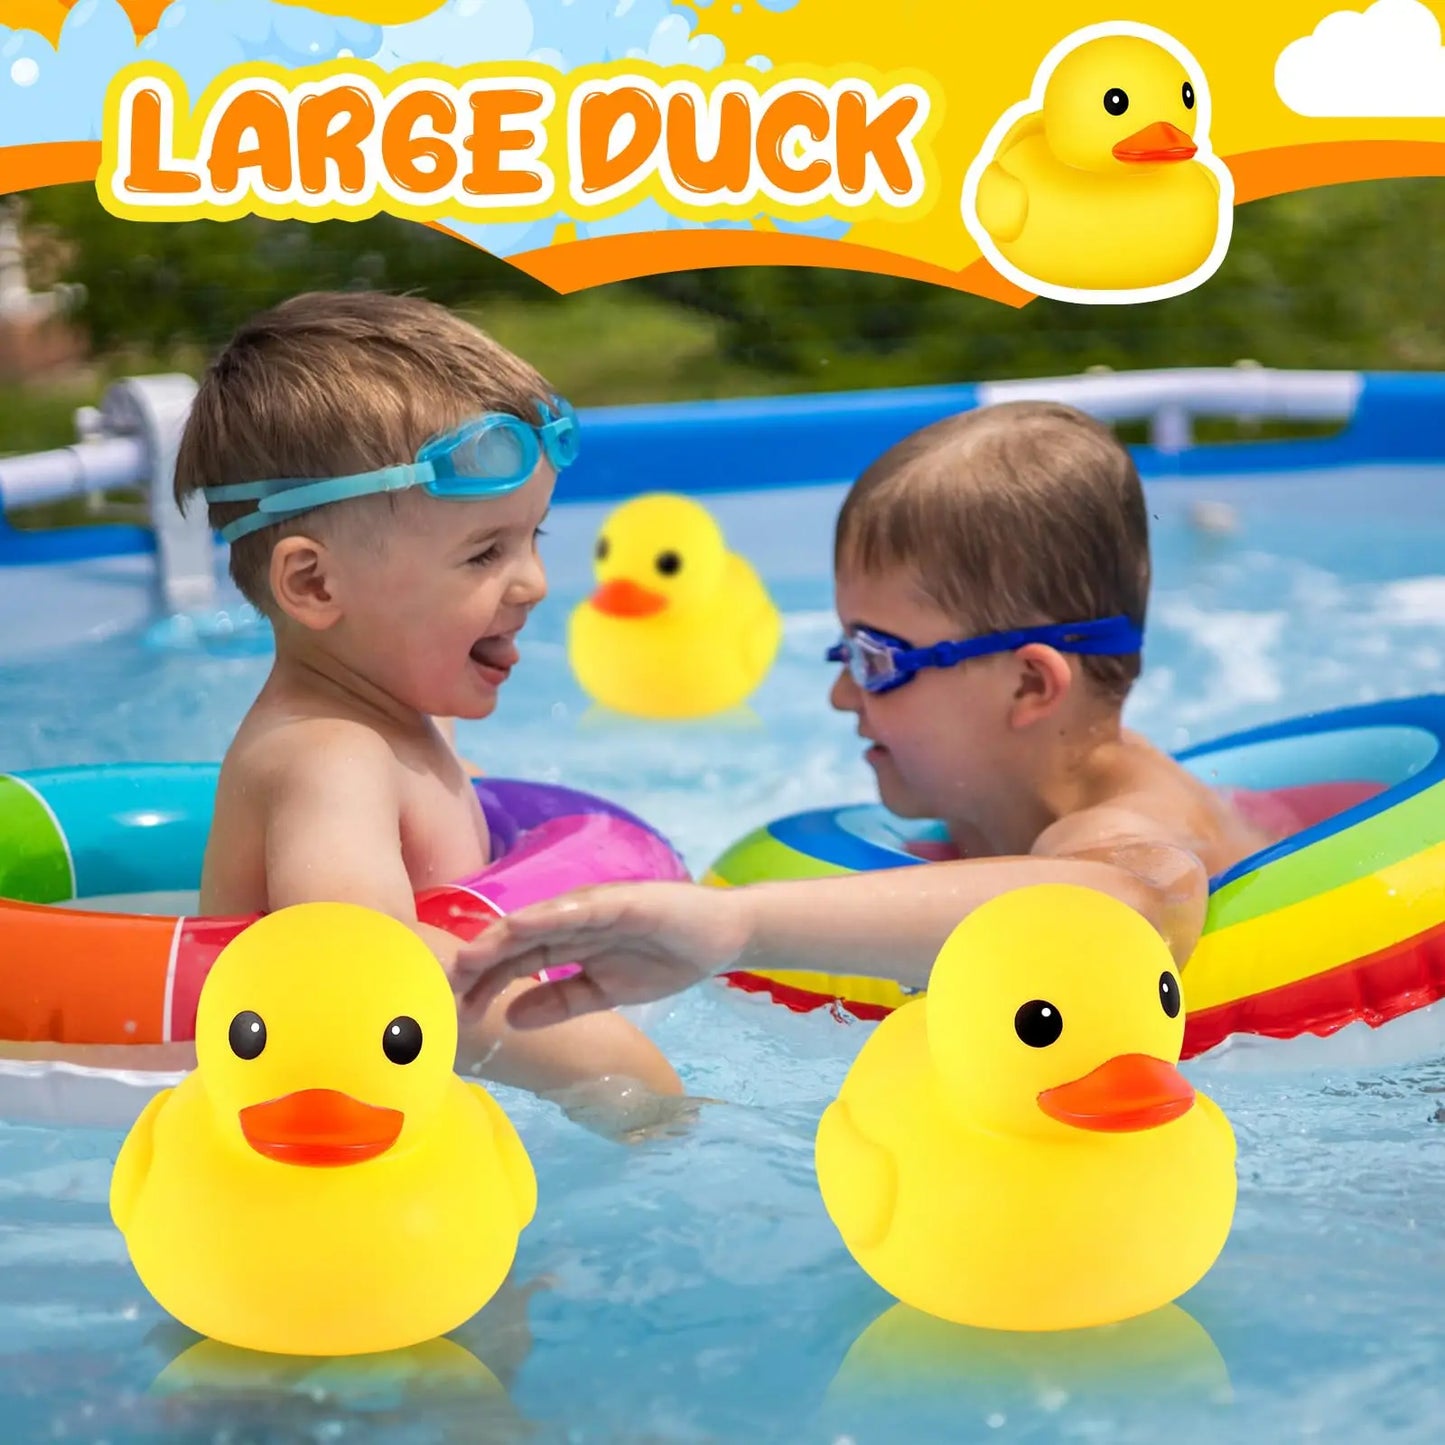 2 Pcs Jumbo Rubber Duck 10.2 Inch Duck Bath Toy Giant Rubber Duck Large Rubber Ducky Bath Toy Squeaky Big Yellow Rubber Ducks